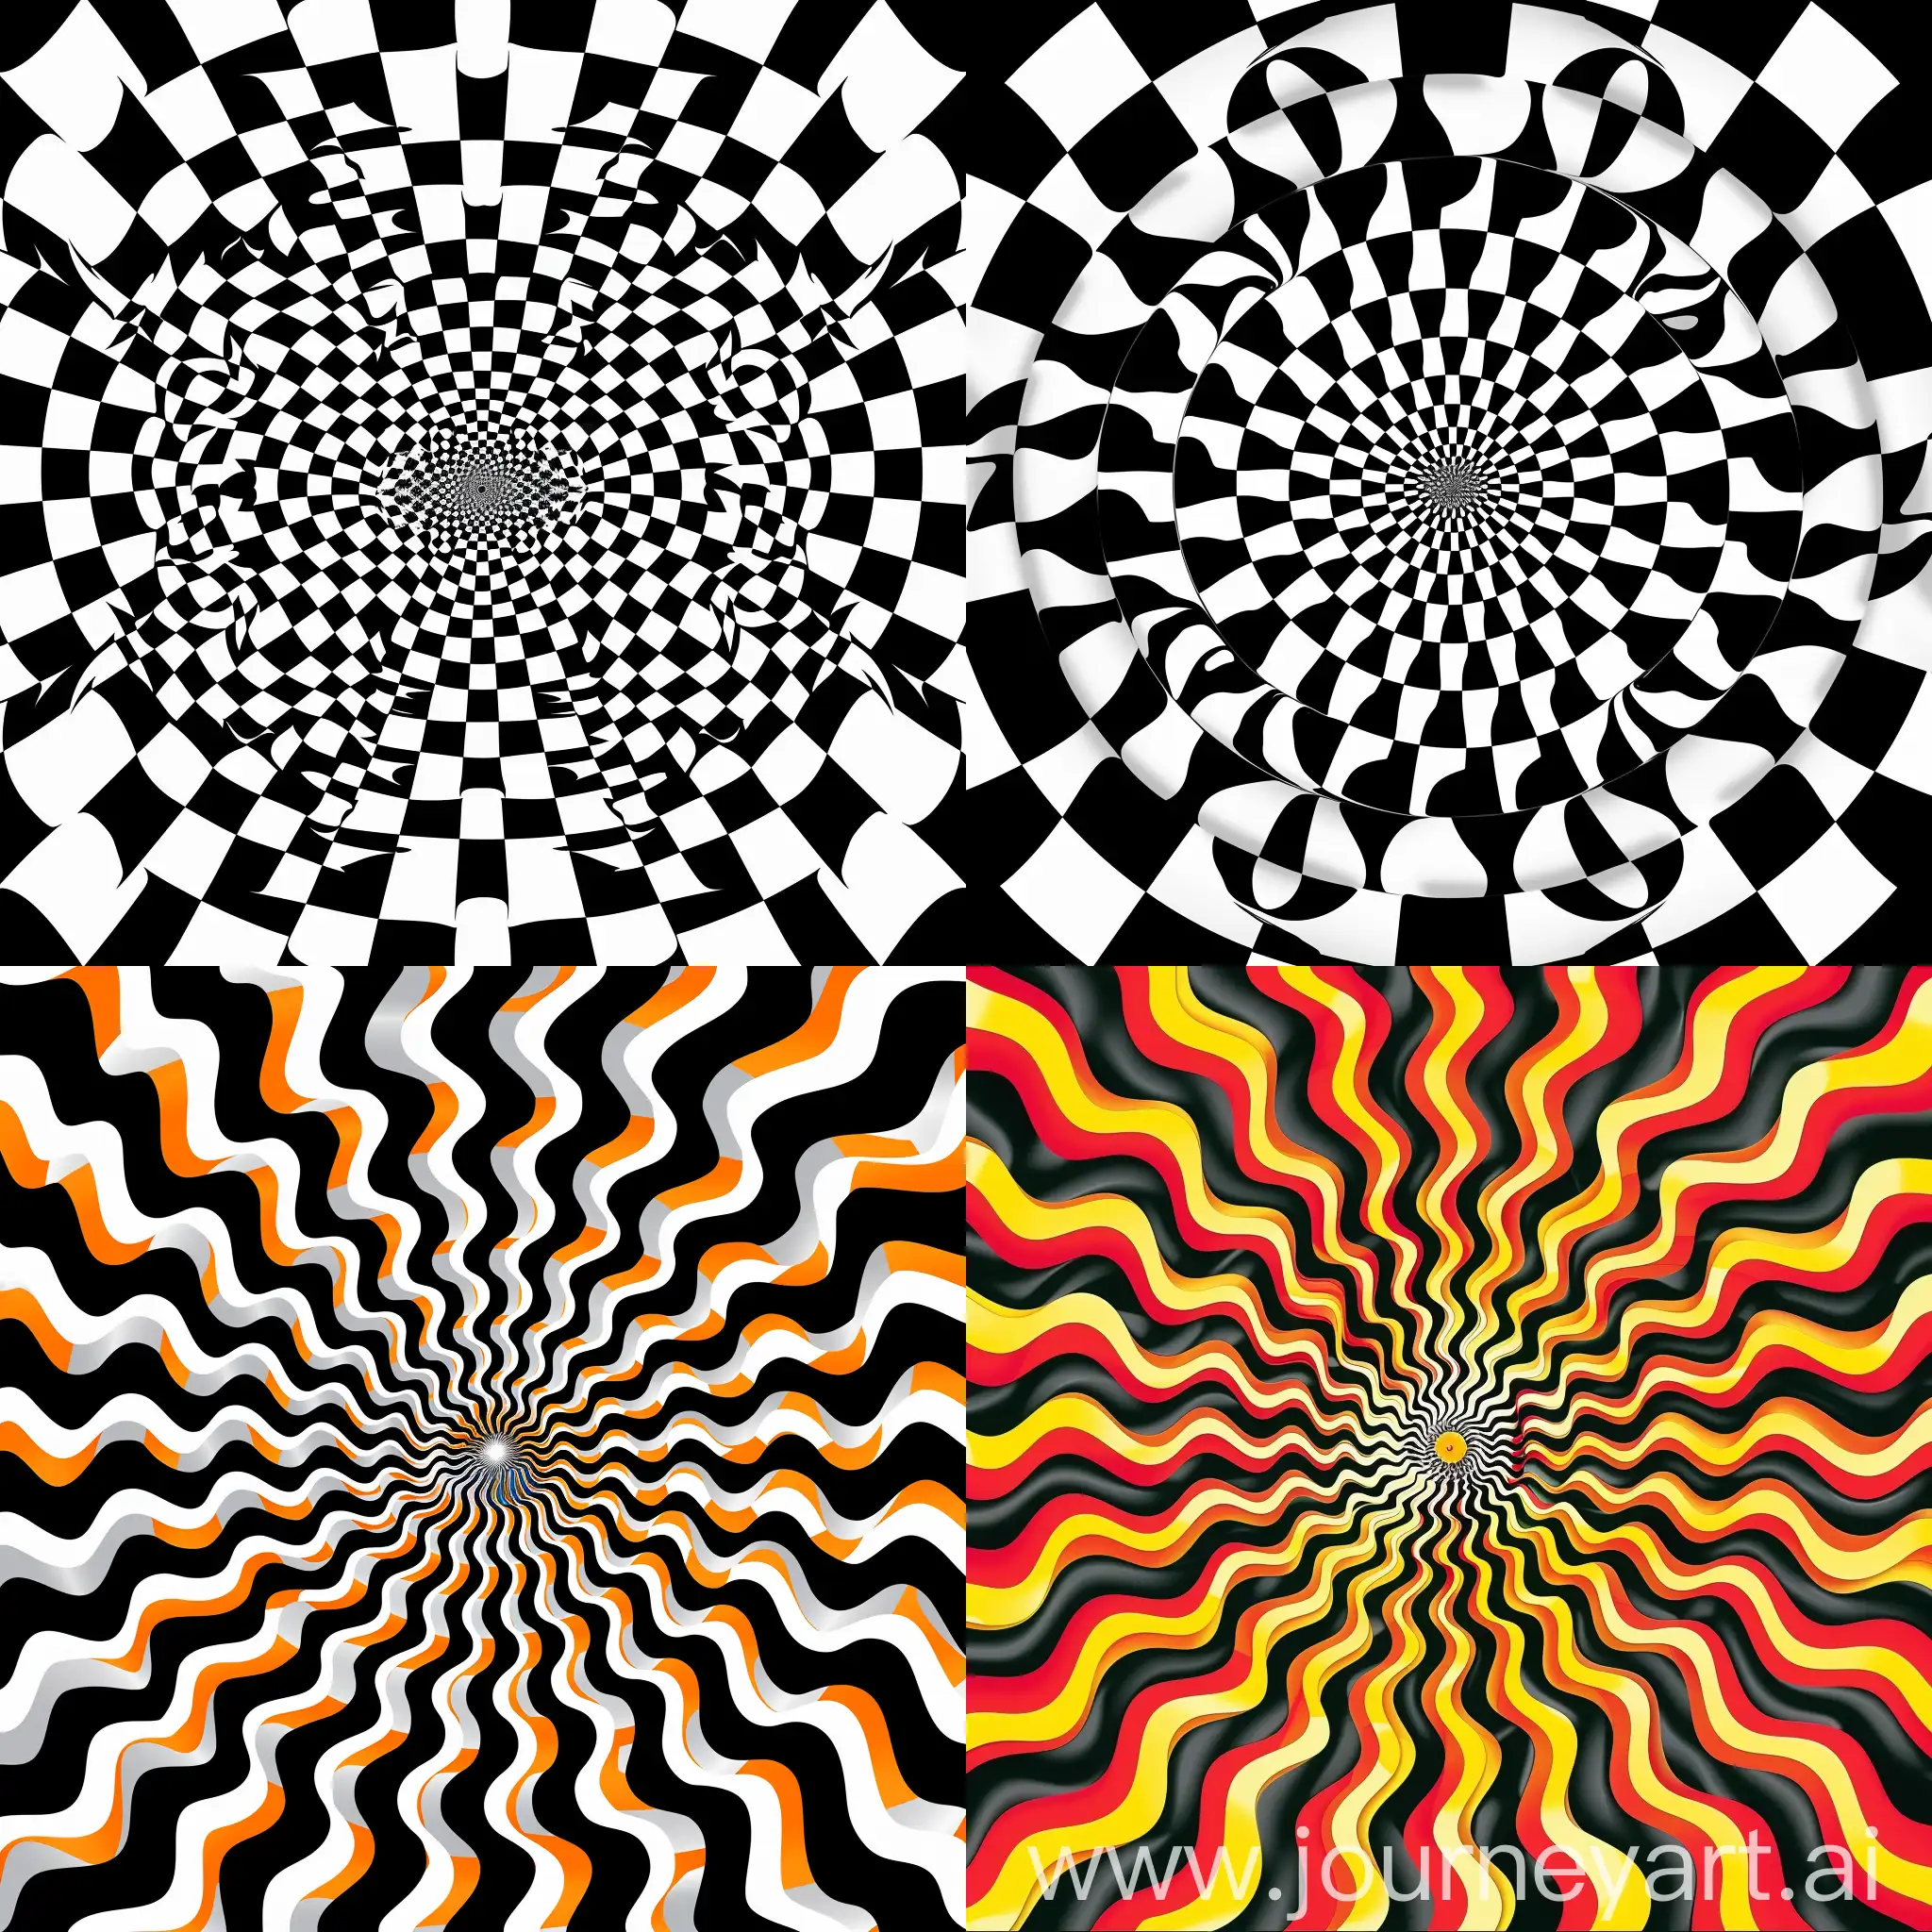 Mesmerizing-Optical-Illusion-Artwork-Geometric-Patterns-in-Motion